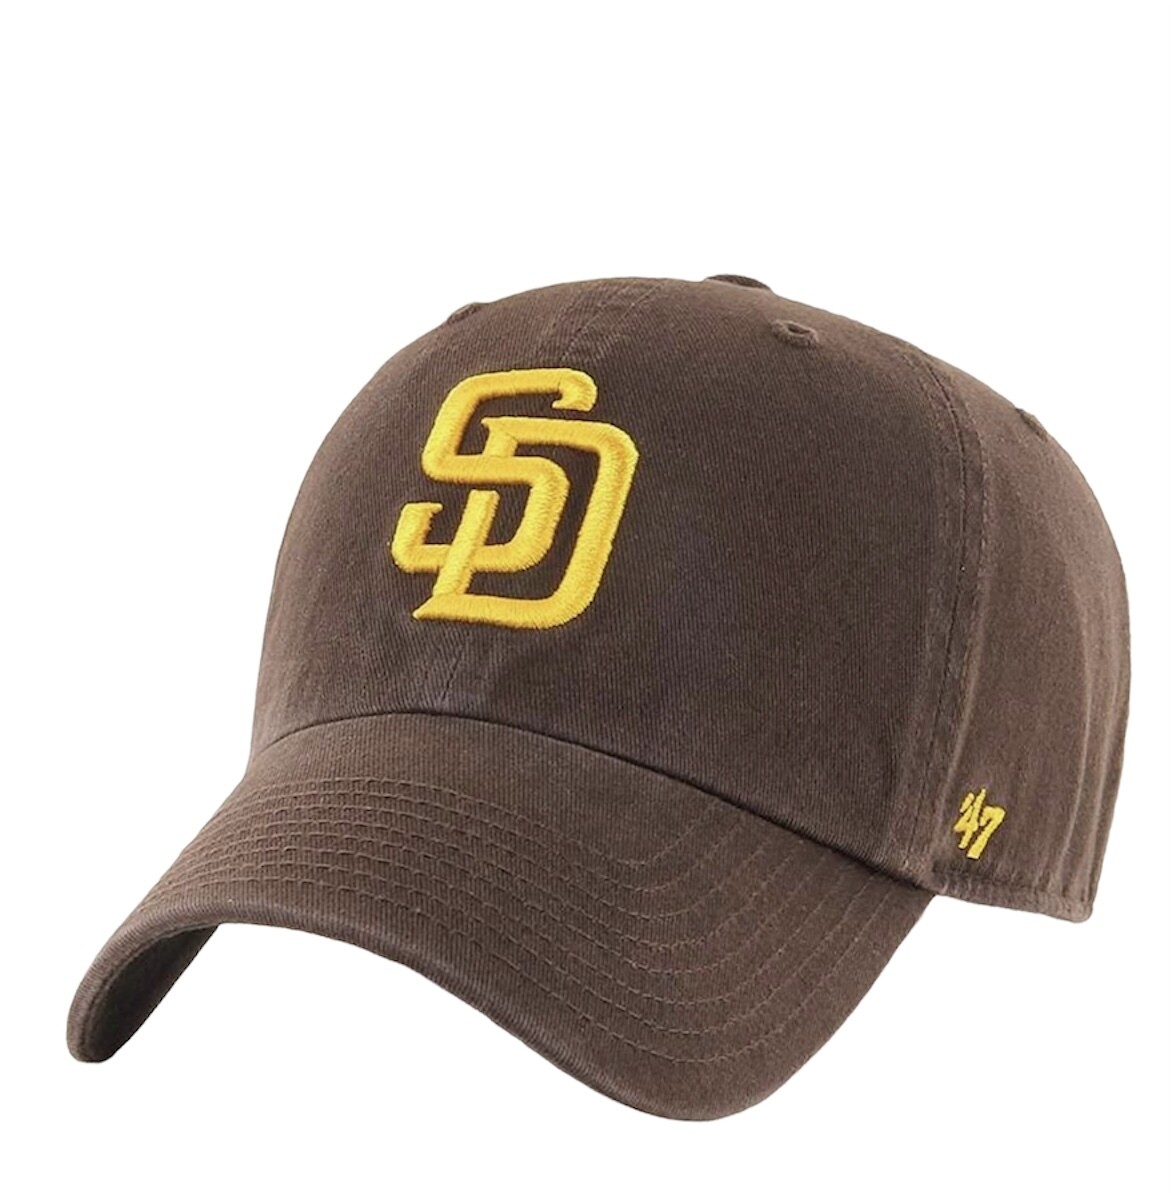 San Diego Padres Men's 47 Brand Clean Up Adjustable Hat